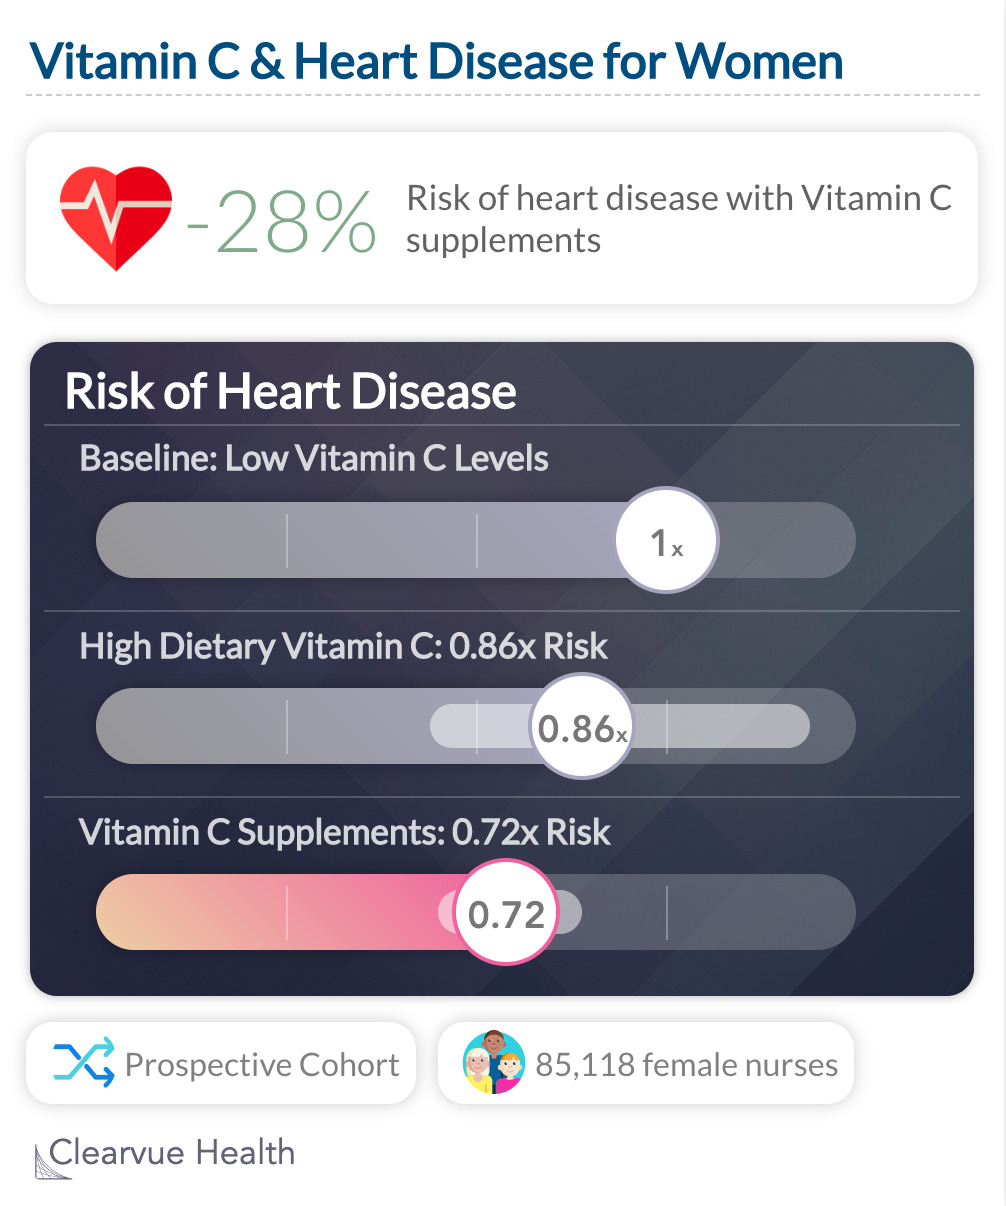 Vitamin C & Heart Disease for Women